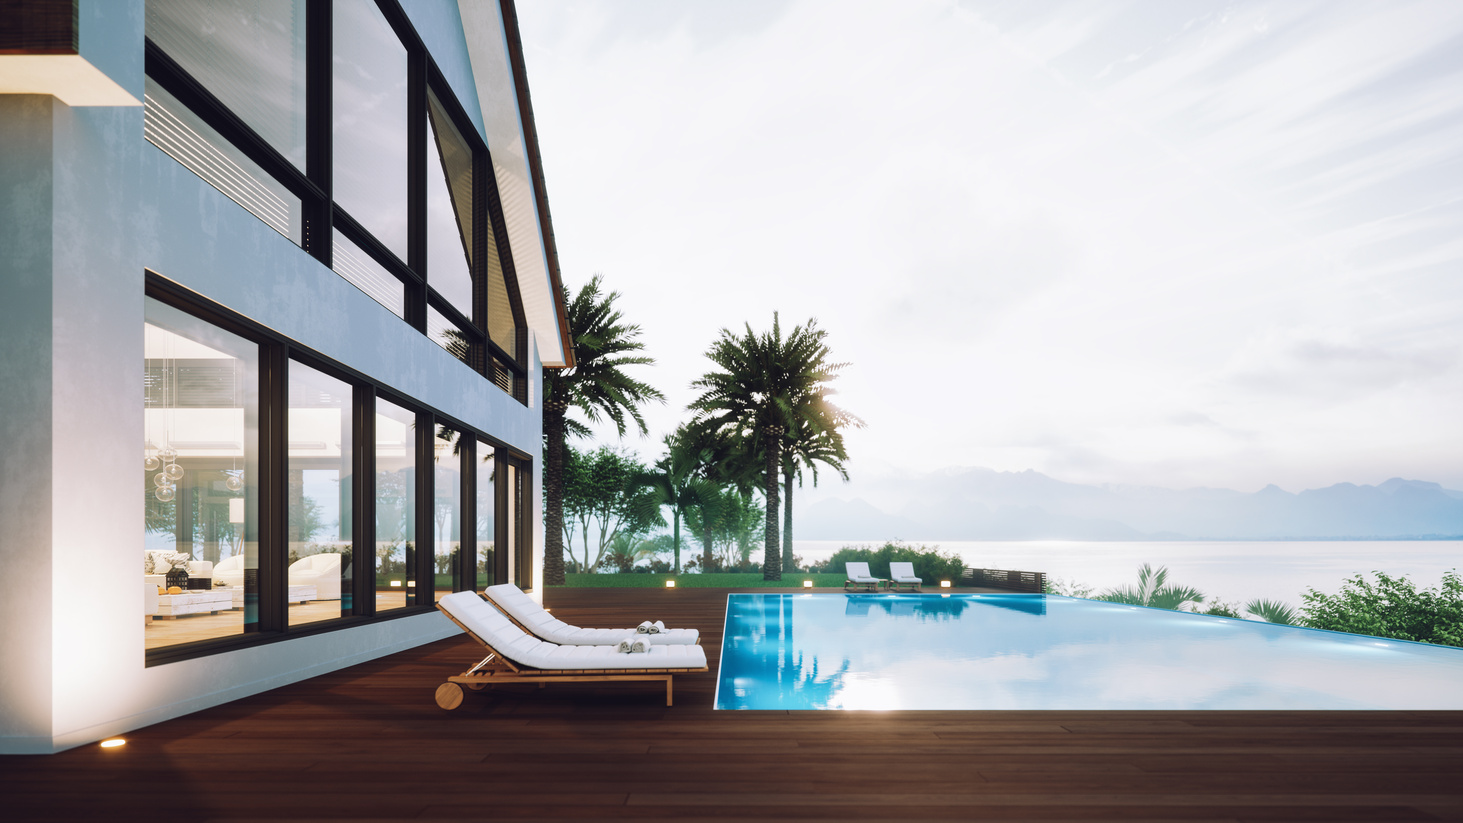 Luxury House With Infinity Pool